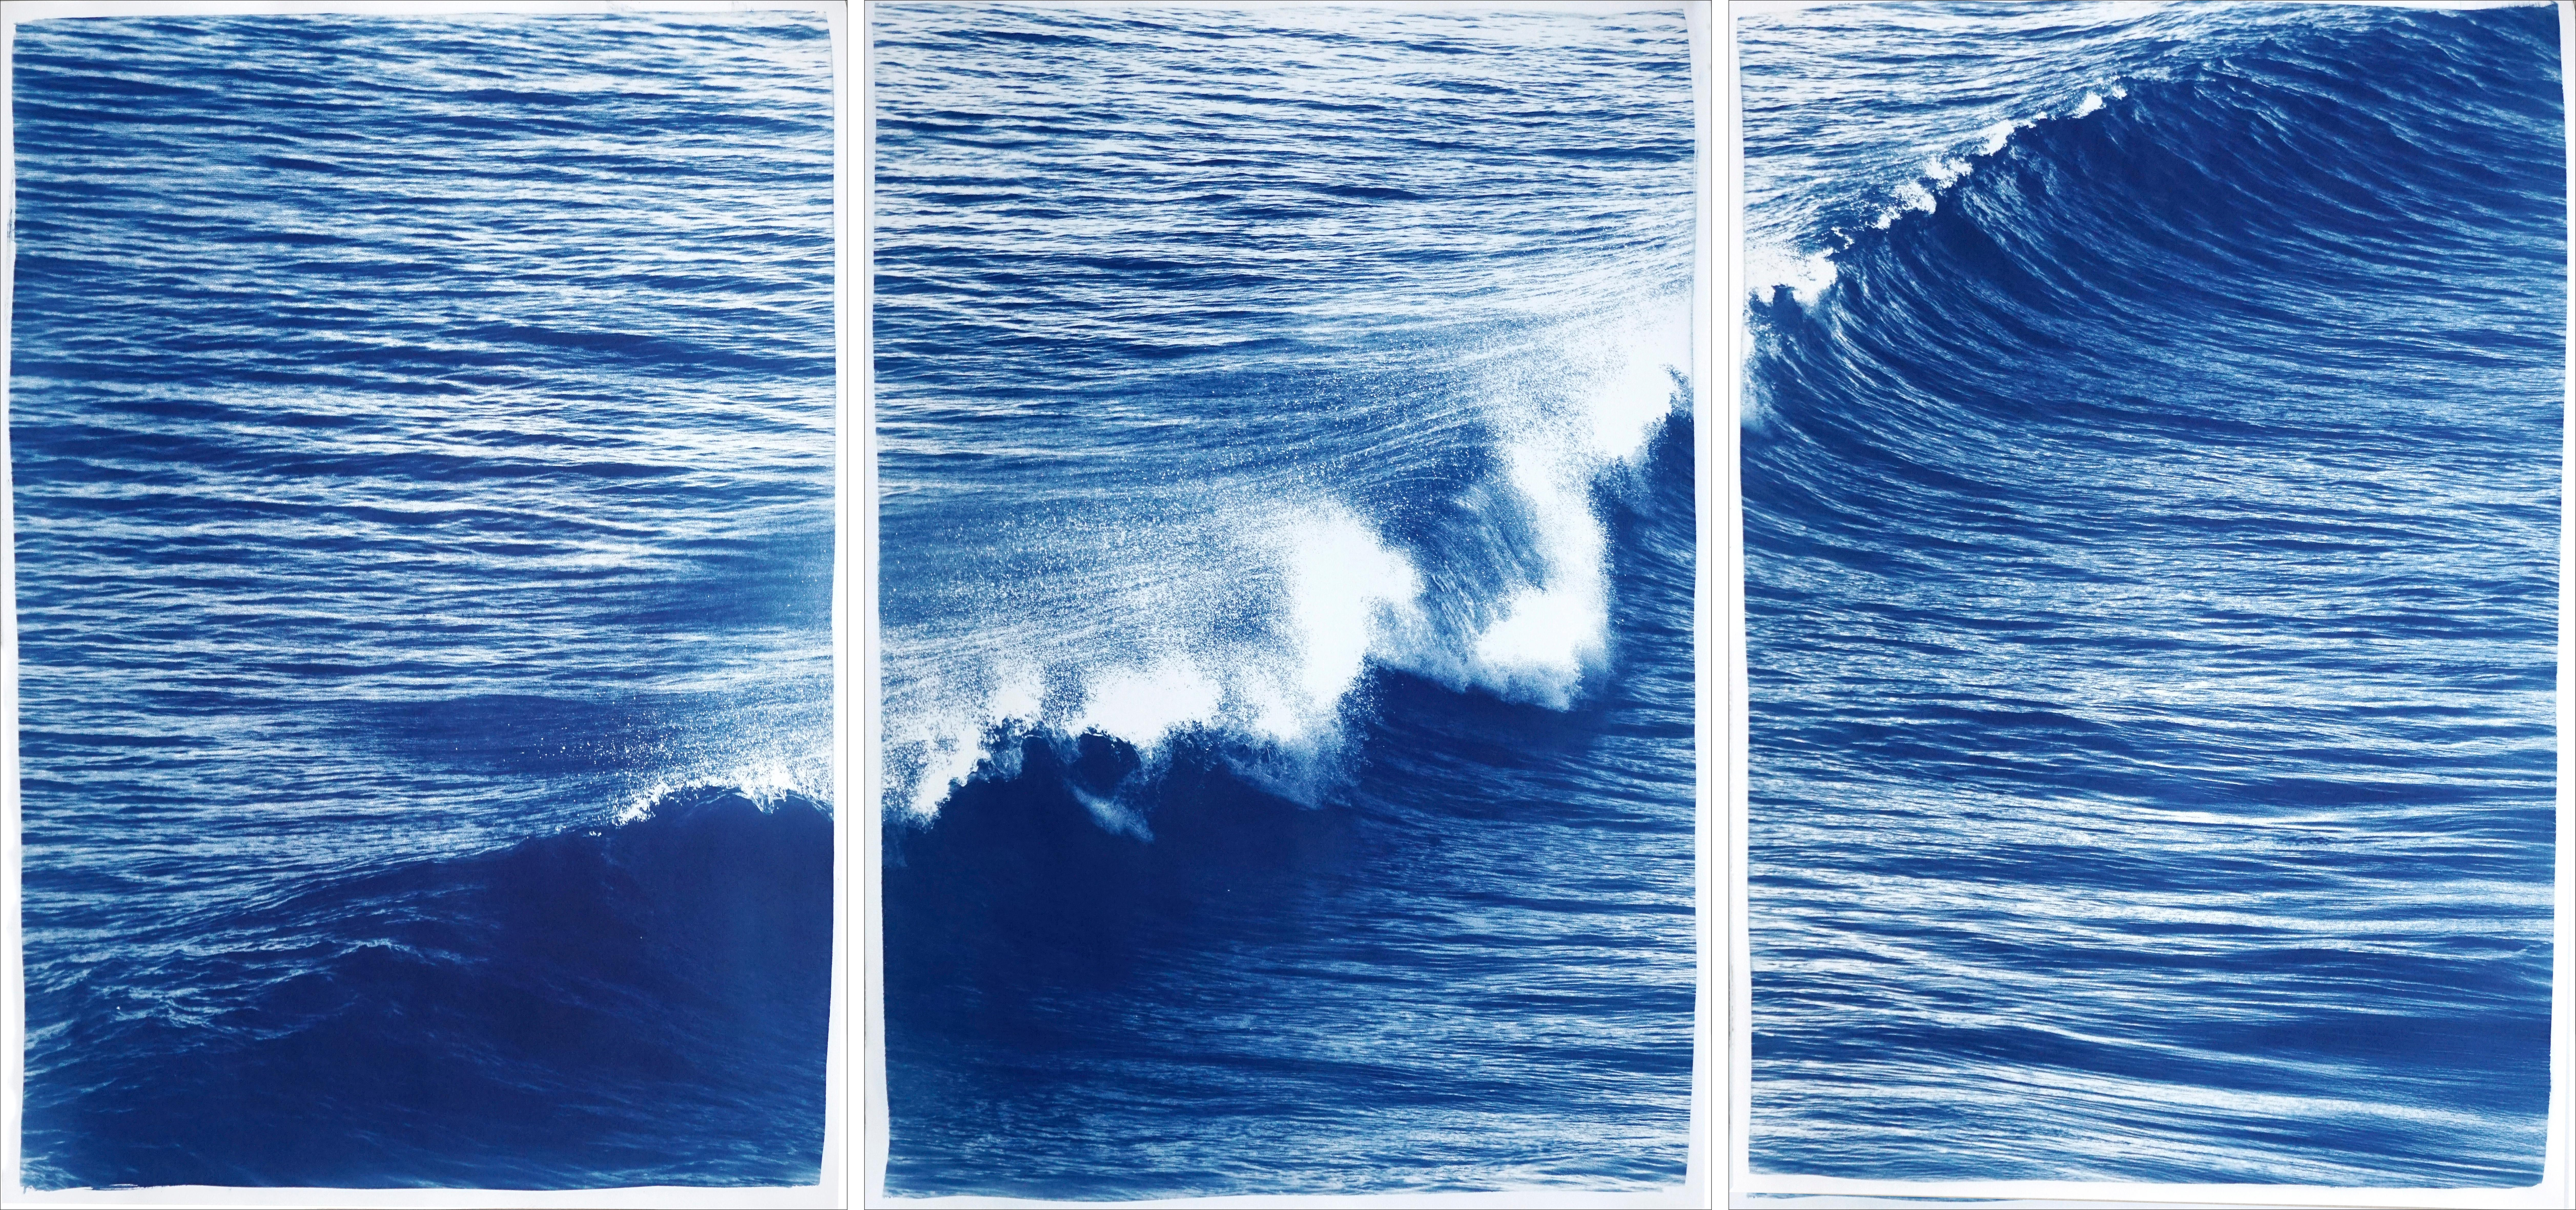 Kind of Cyan Landscape Print - Los Angeles Crashing Waves Triptych, Nautical, Handmade Cyanotype in Blue Tones